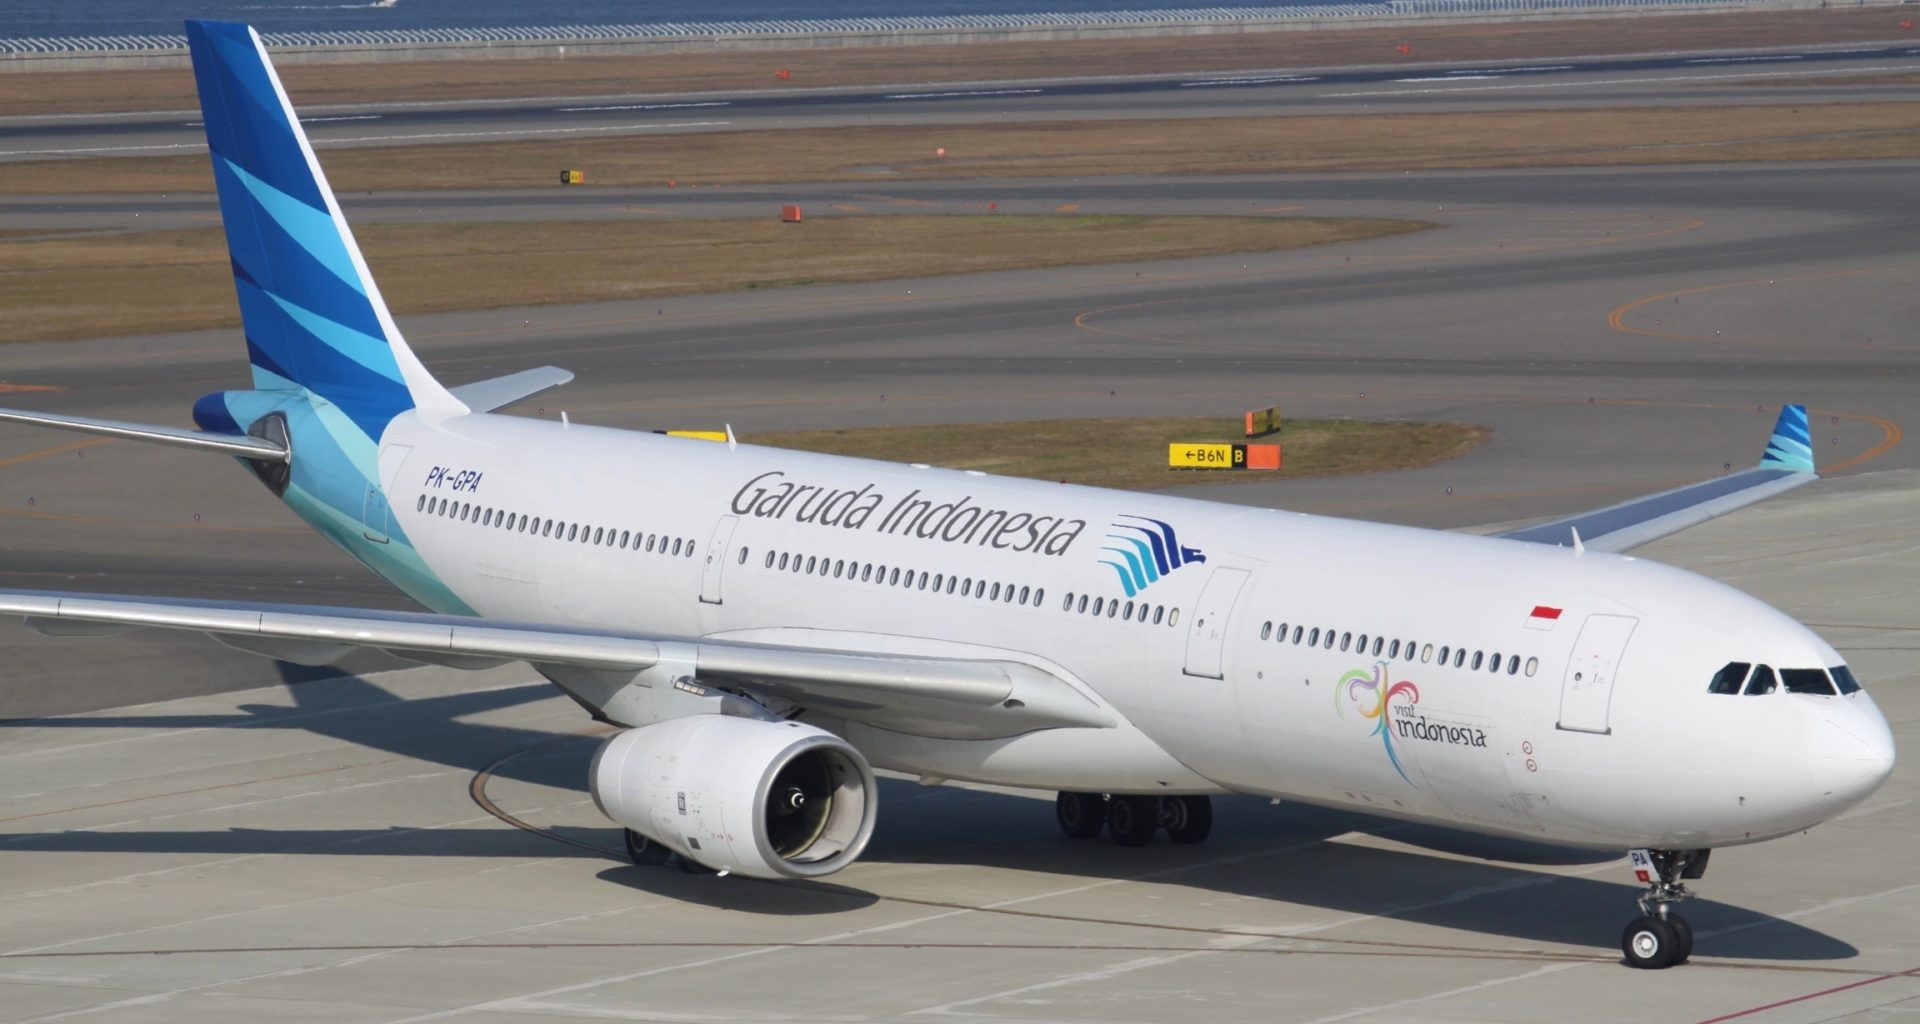 Garuda Indonesia's third route to Australia, available twice per week.